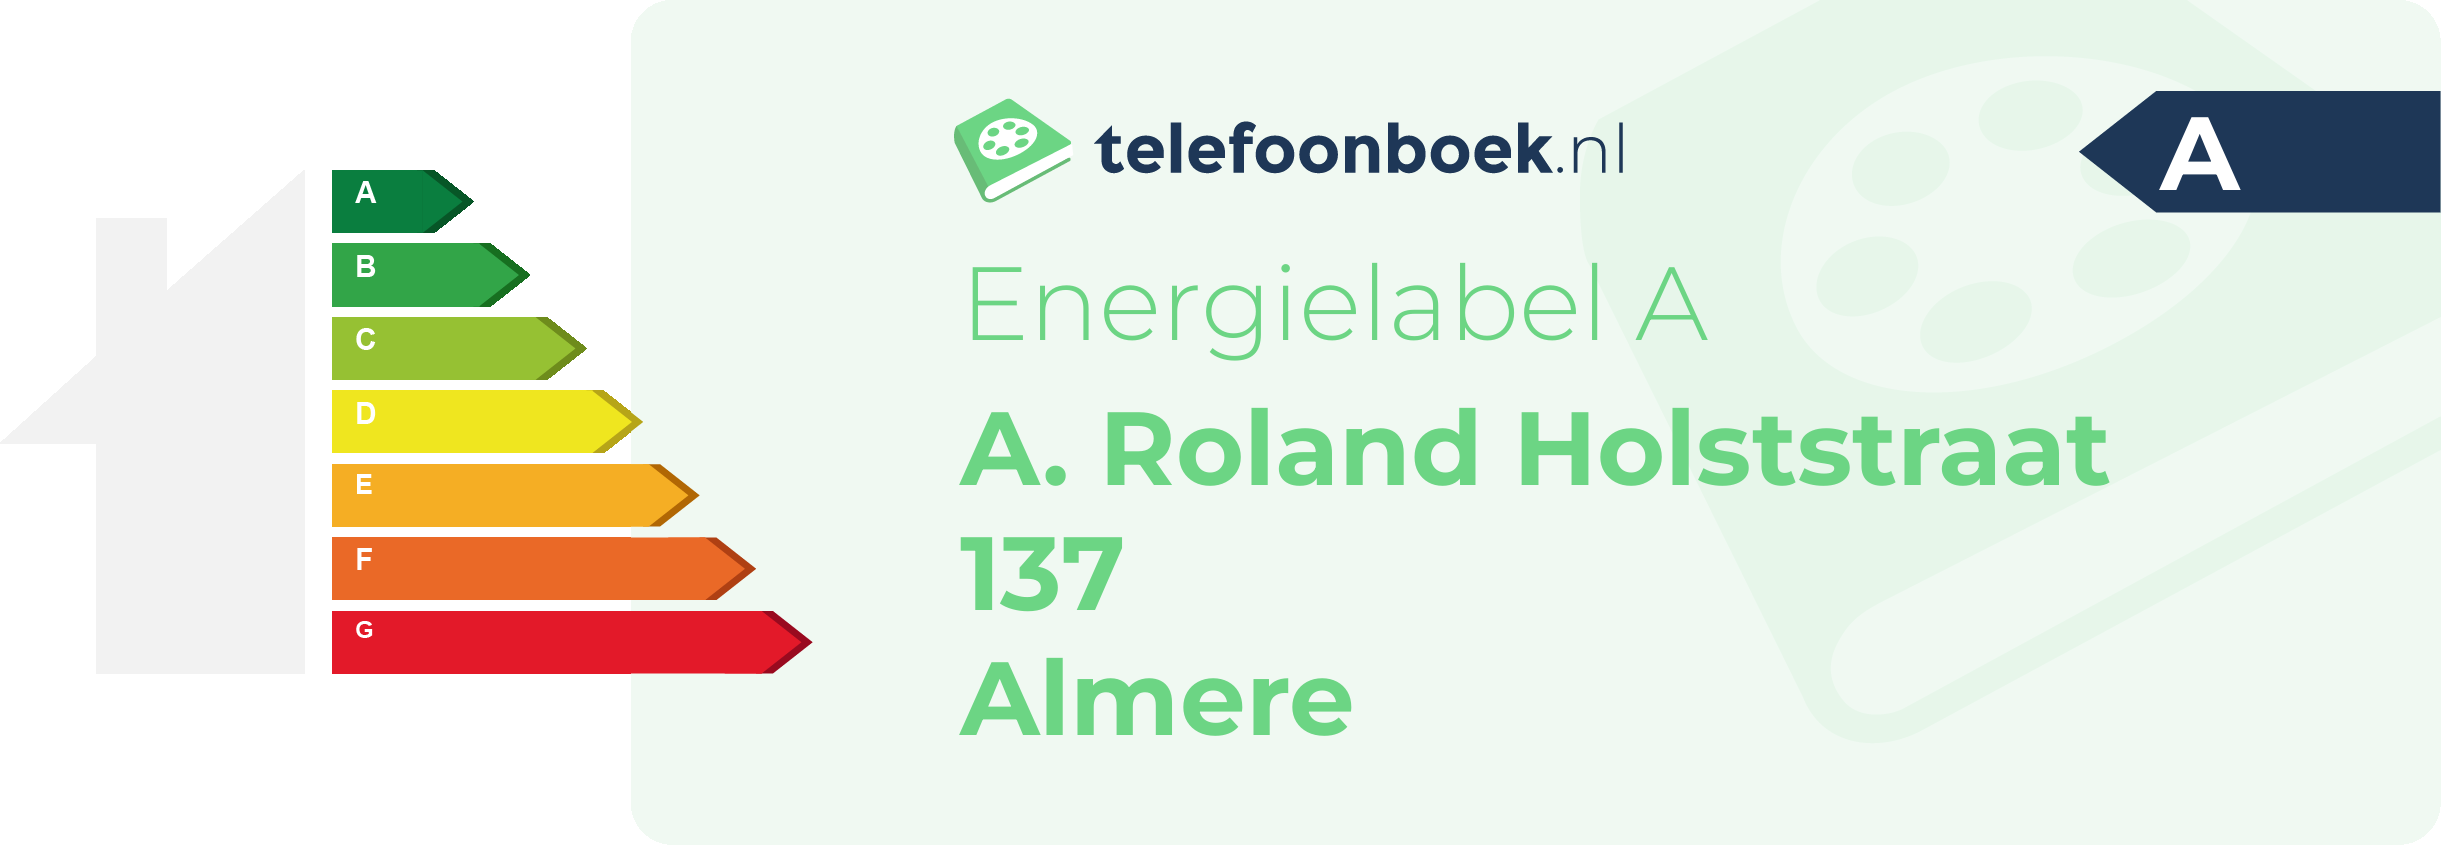 Energielabel A. Roland Holststraat 137 Almere